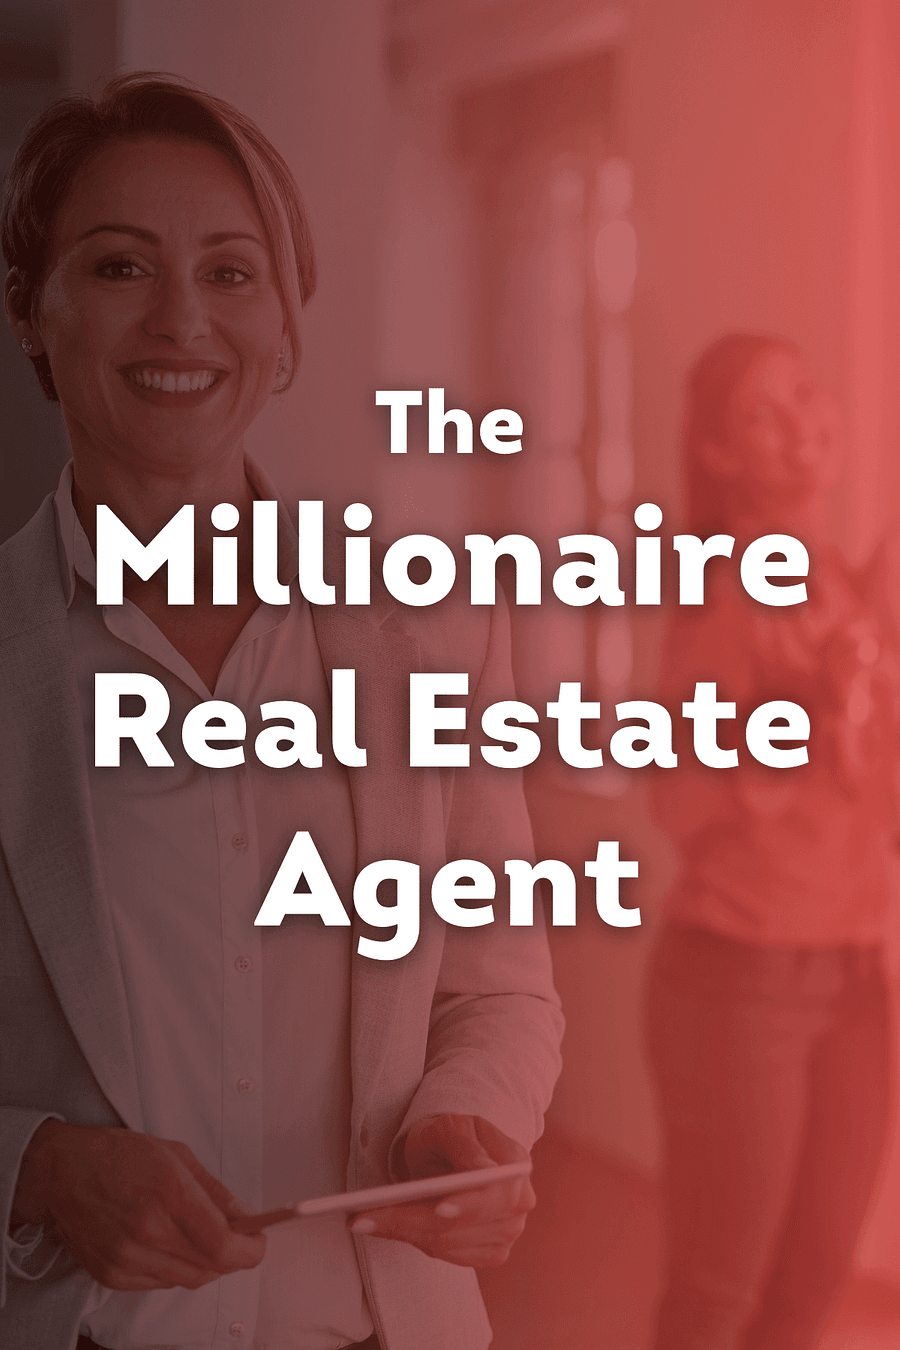 The Millionaire Real Estate Agent by Gary Keller, Dave Jenks, Jay Papasan - Book Summary